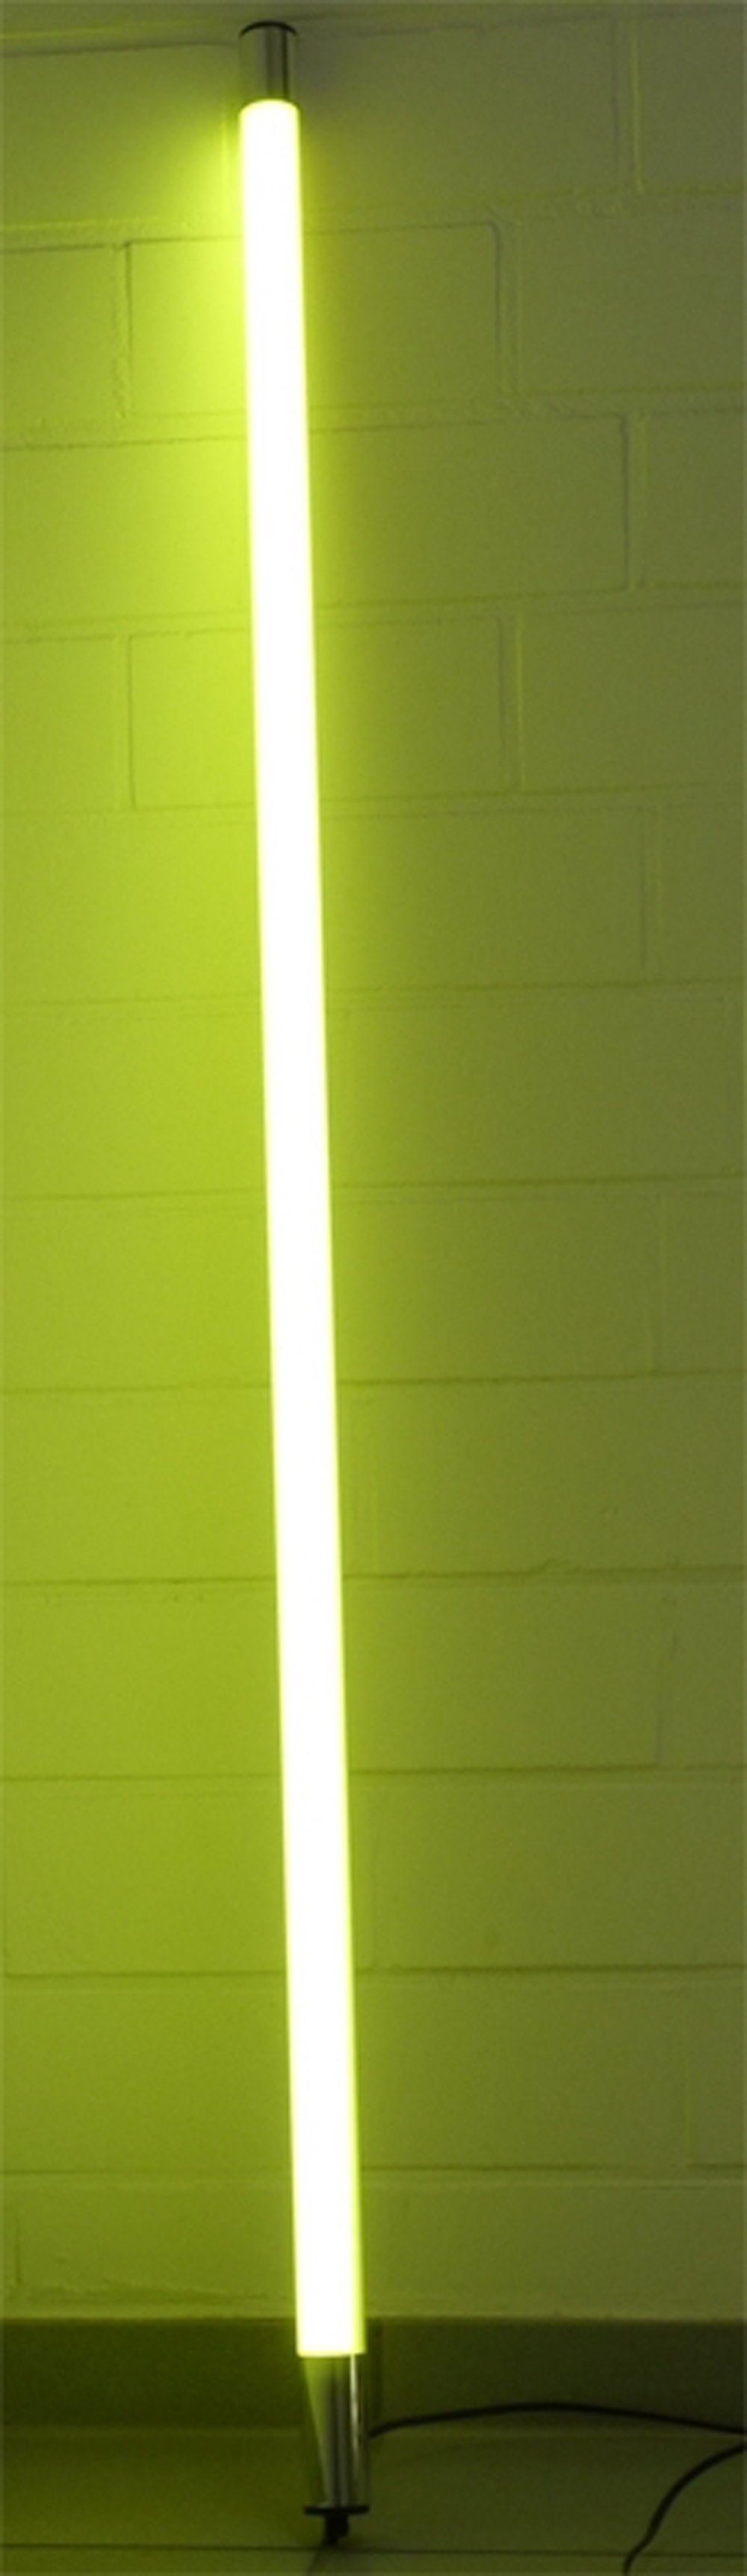 Wandleuchte Gelb XENON Satiniert LED 1000Lumen LED LED T8, Gelb, Leuchtstab 6727 IP20 Röhre Lang 0,63m Innen